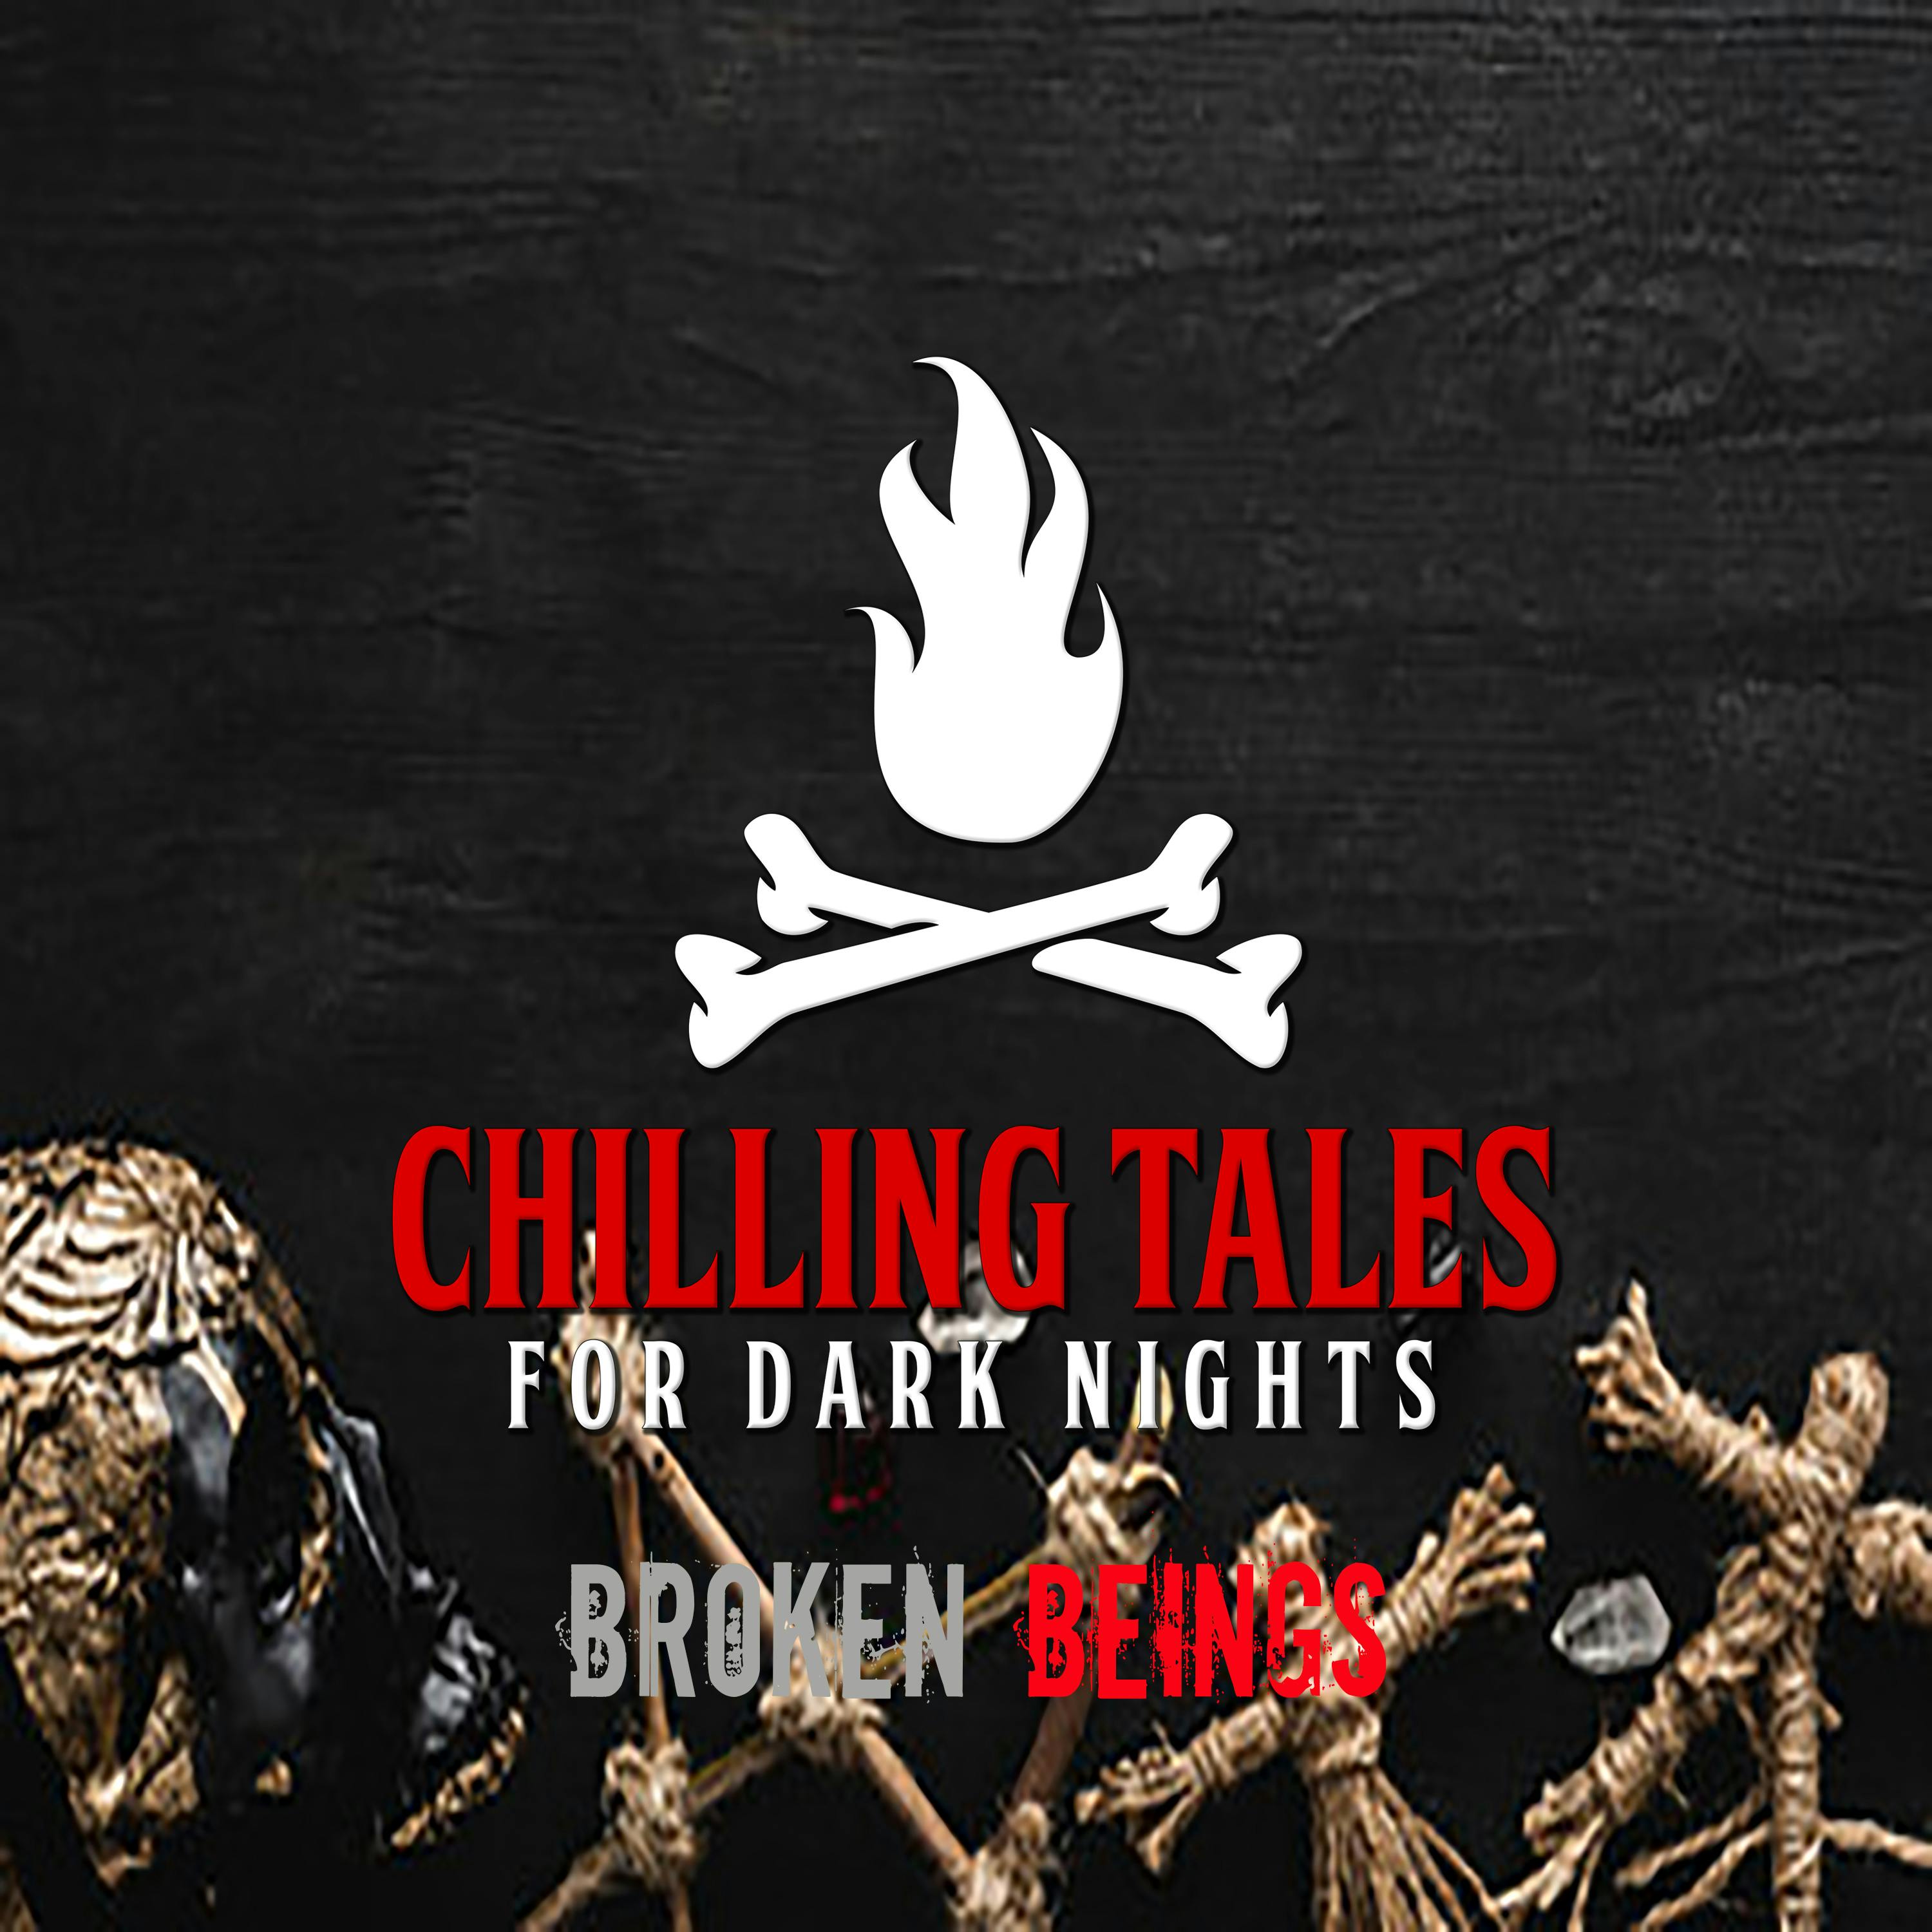 129: Broken Beings - Chilling Tales for Dark Nights